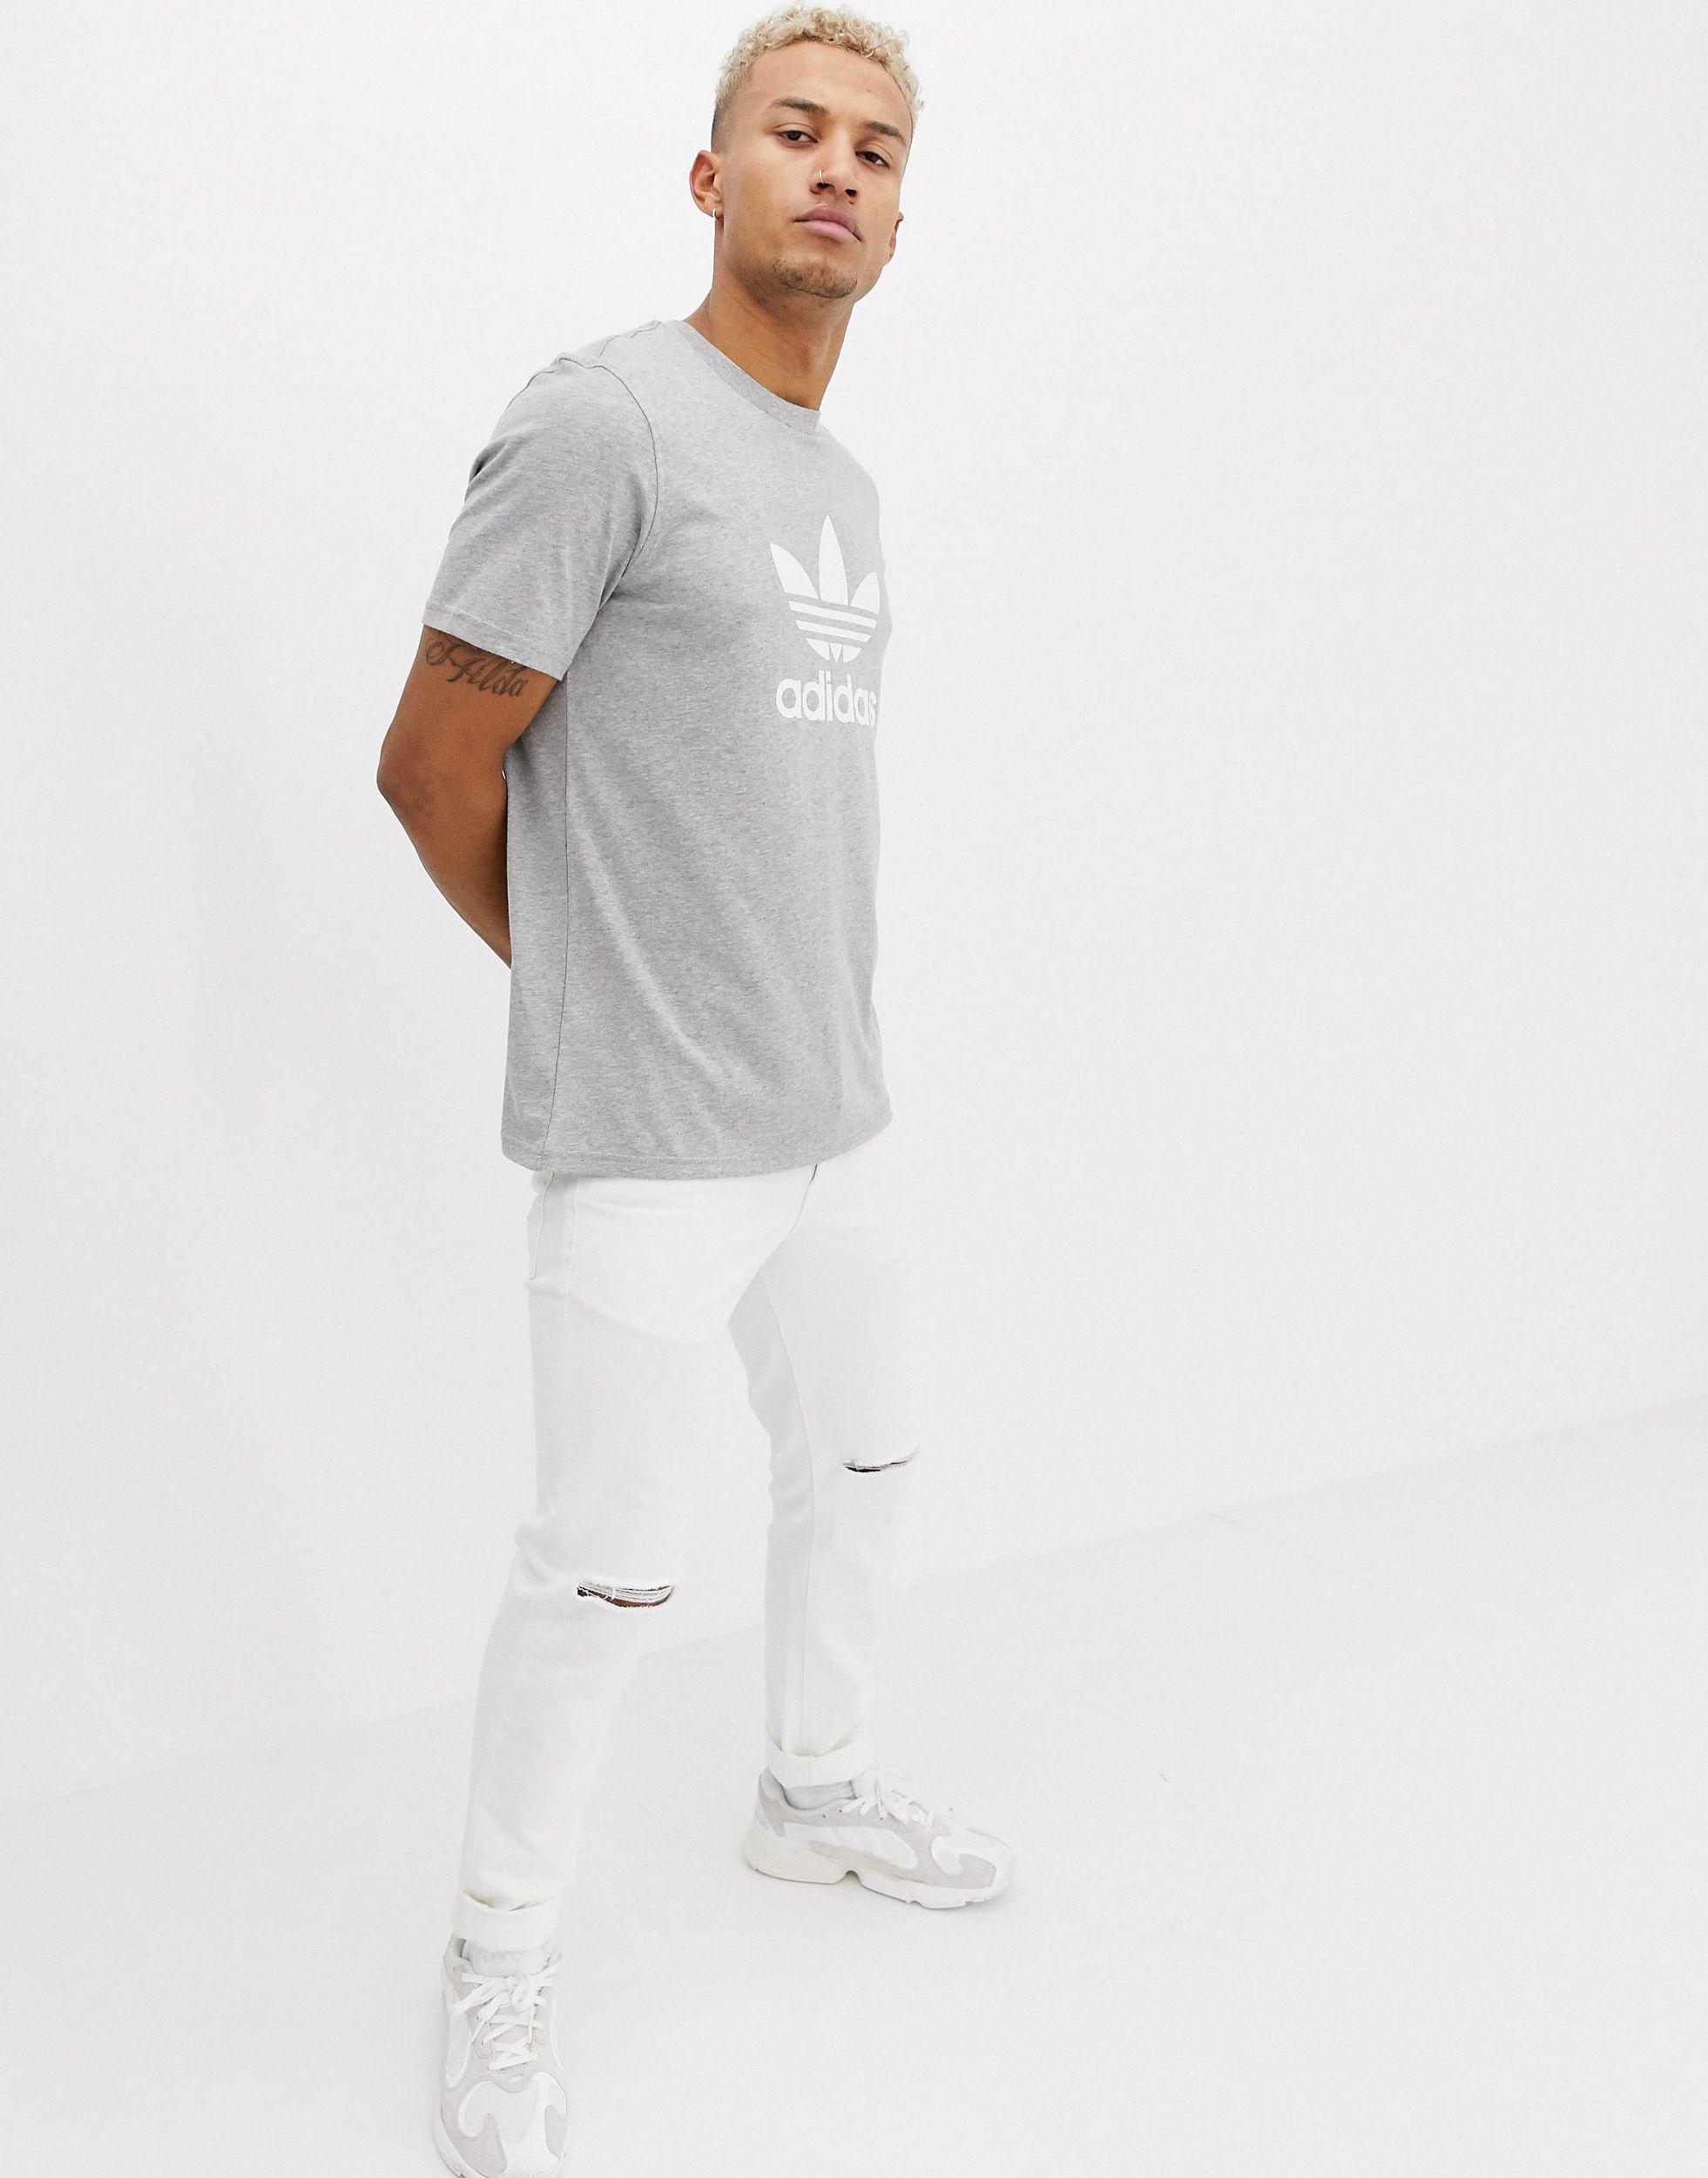 Originals Adicolor T-shirt With Trefoil Logo in Grey for Men - Lyst